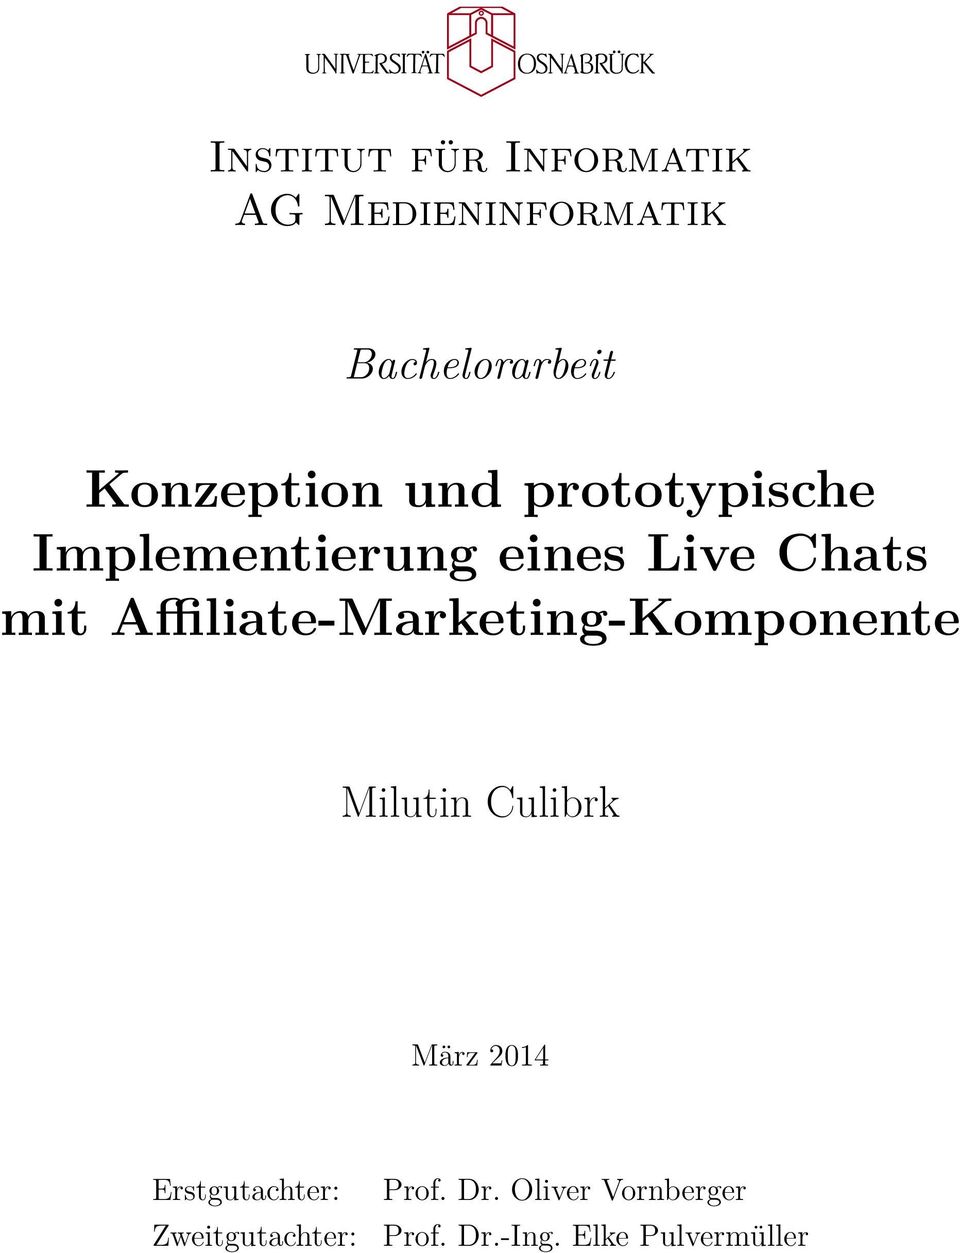 Affiliate-Marketing-Komponente Milutin Culibrk März 2014